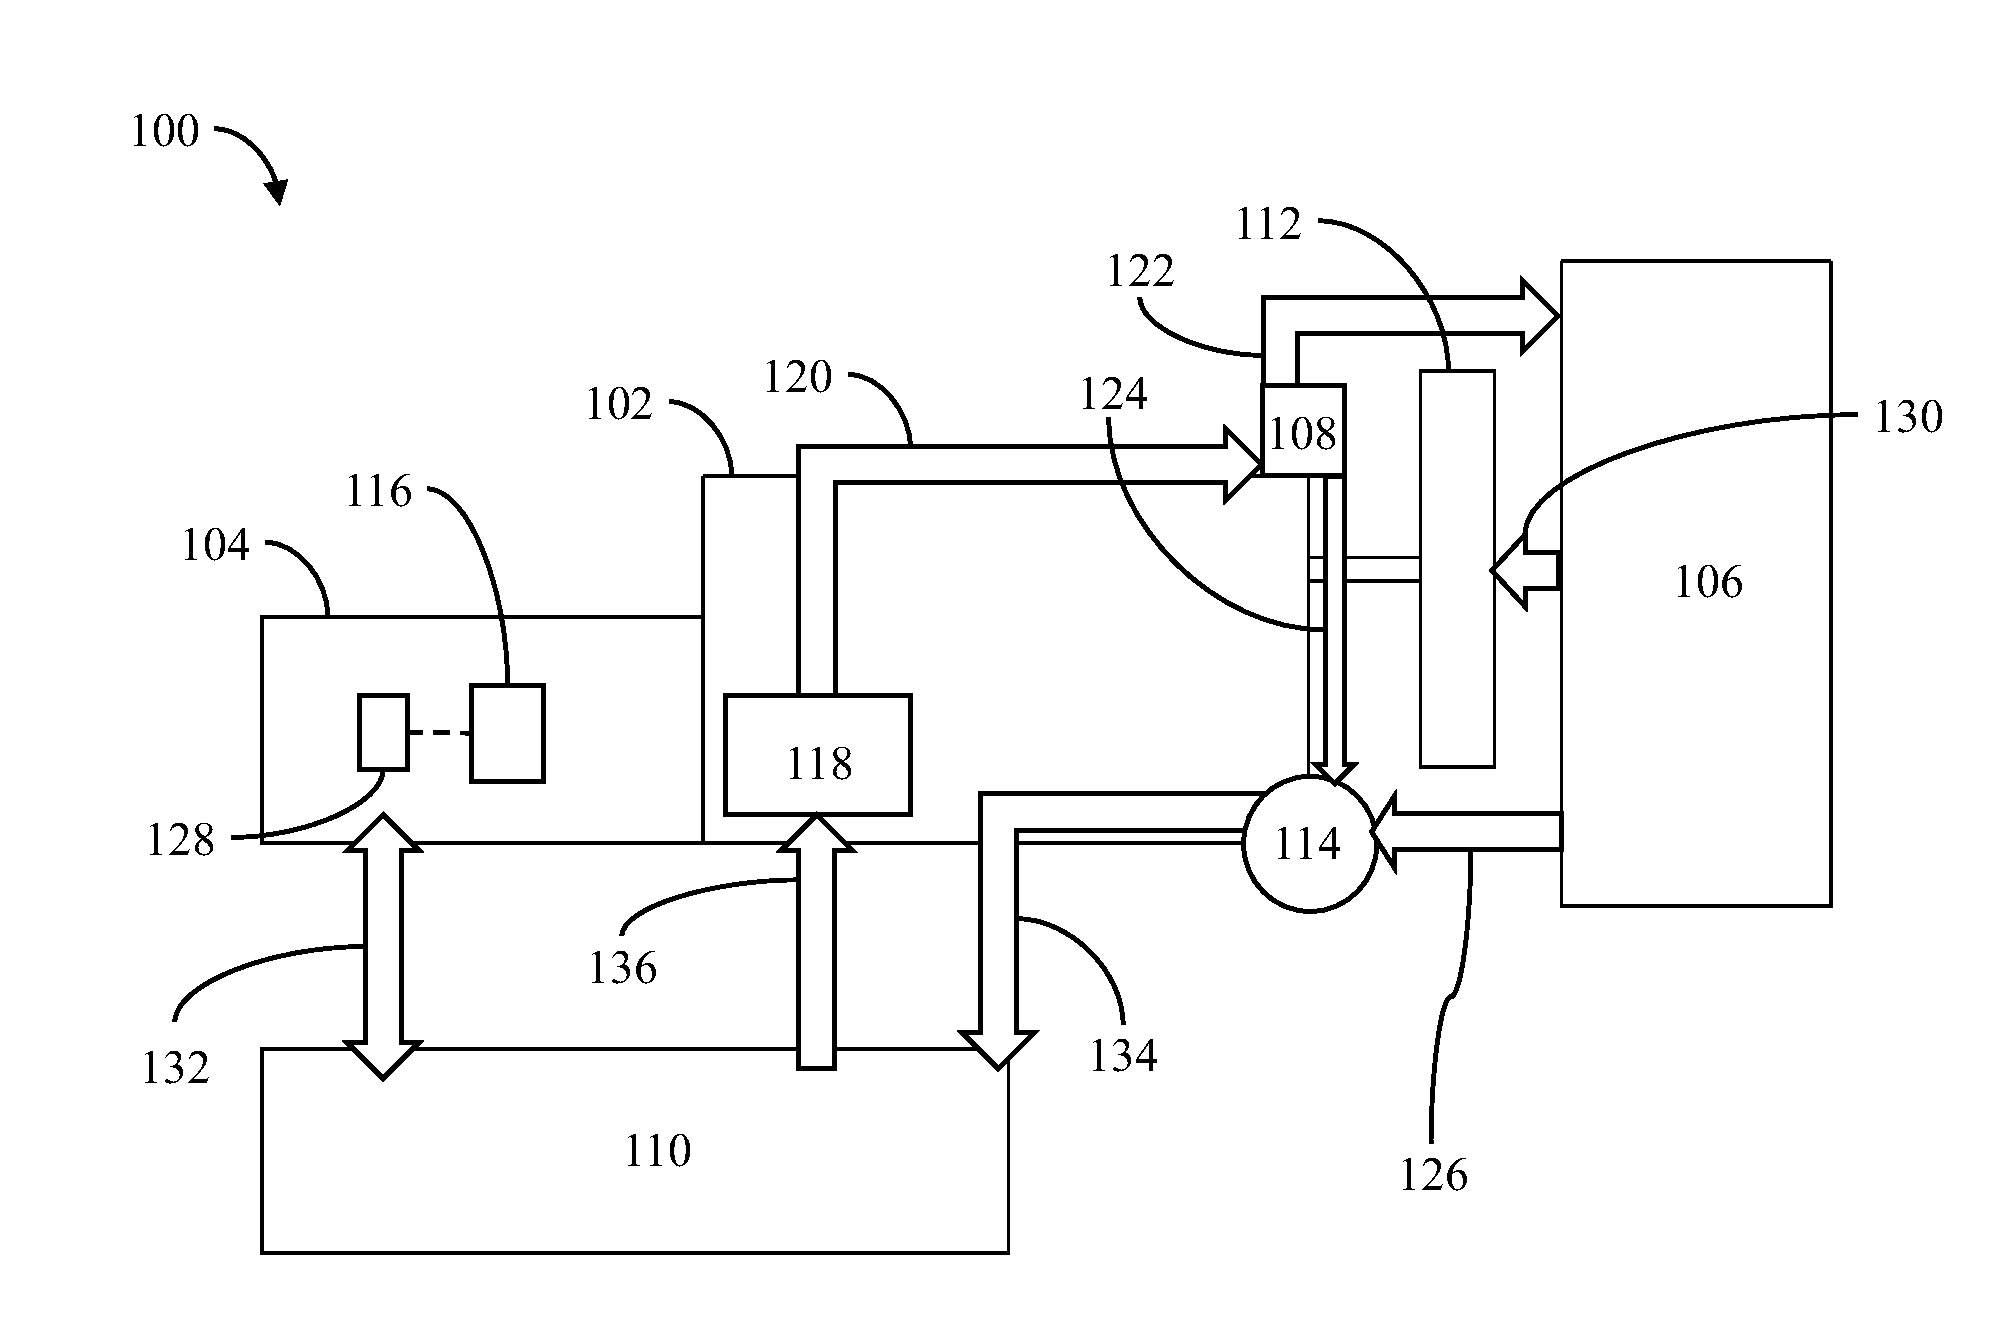 Method to control temperature of engine of generator system